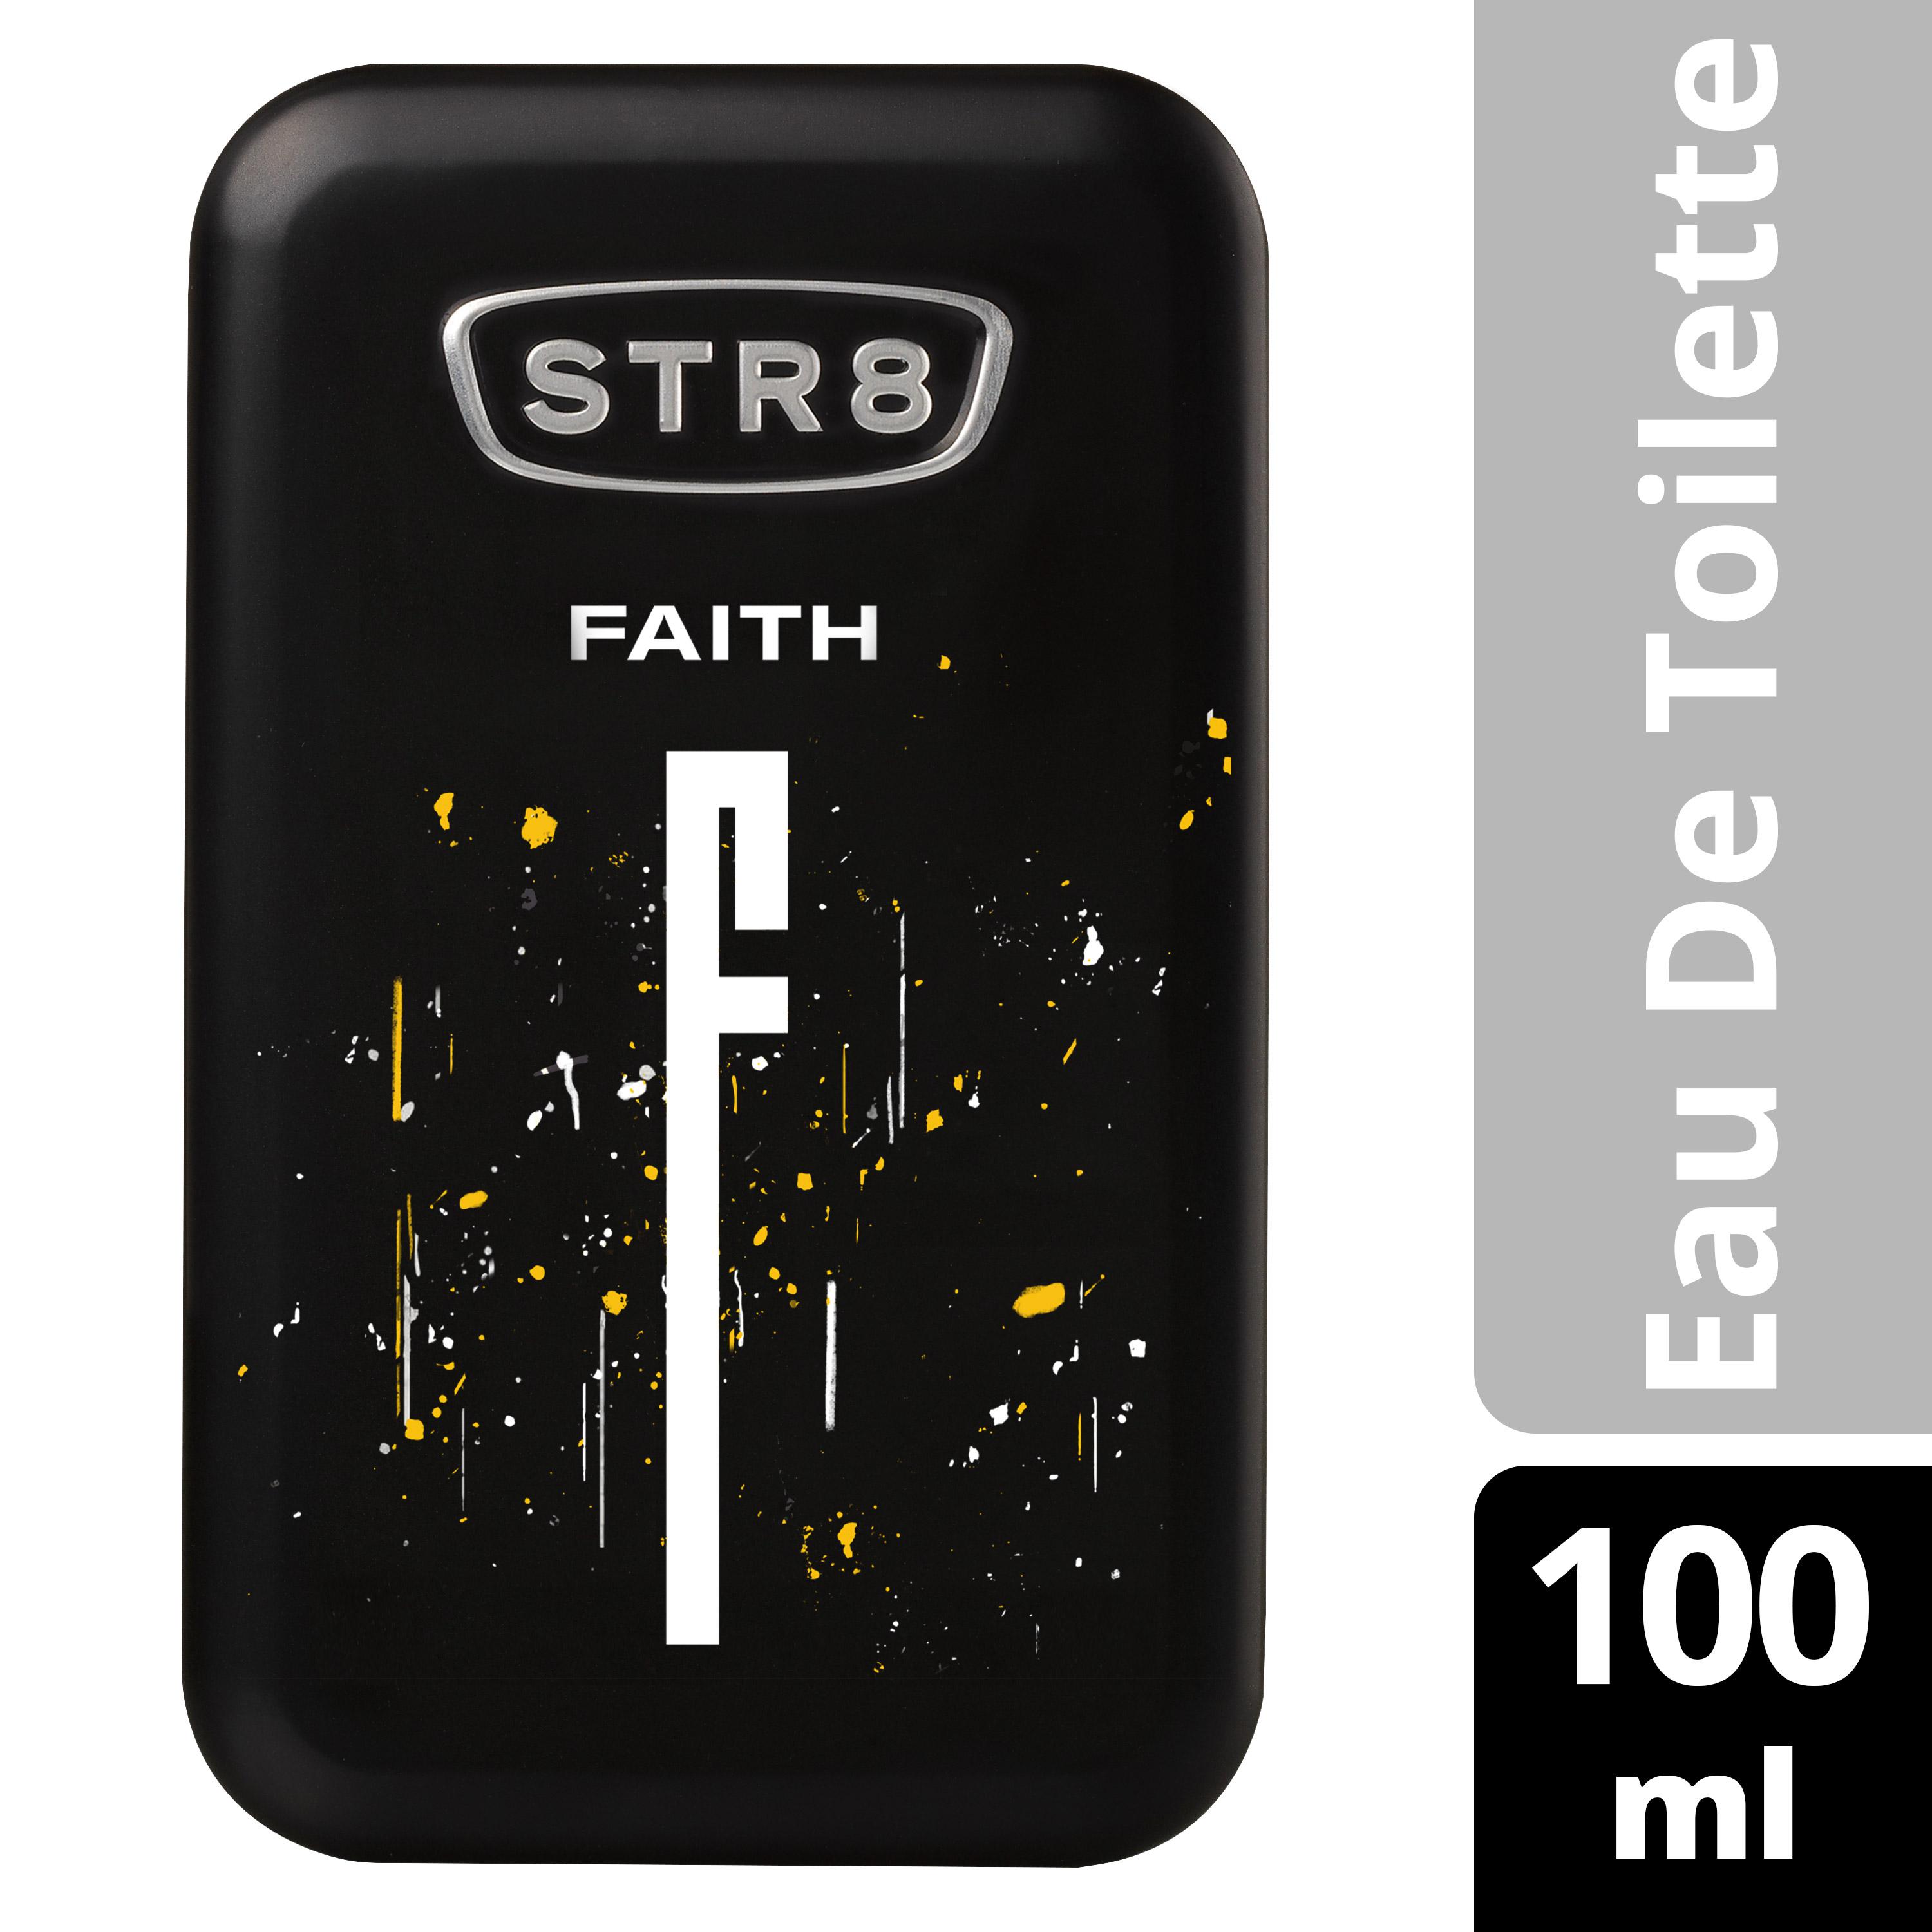 Sarantis Eau de toilette Faith Str8 (100ml)